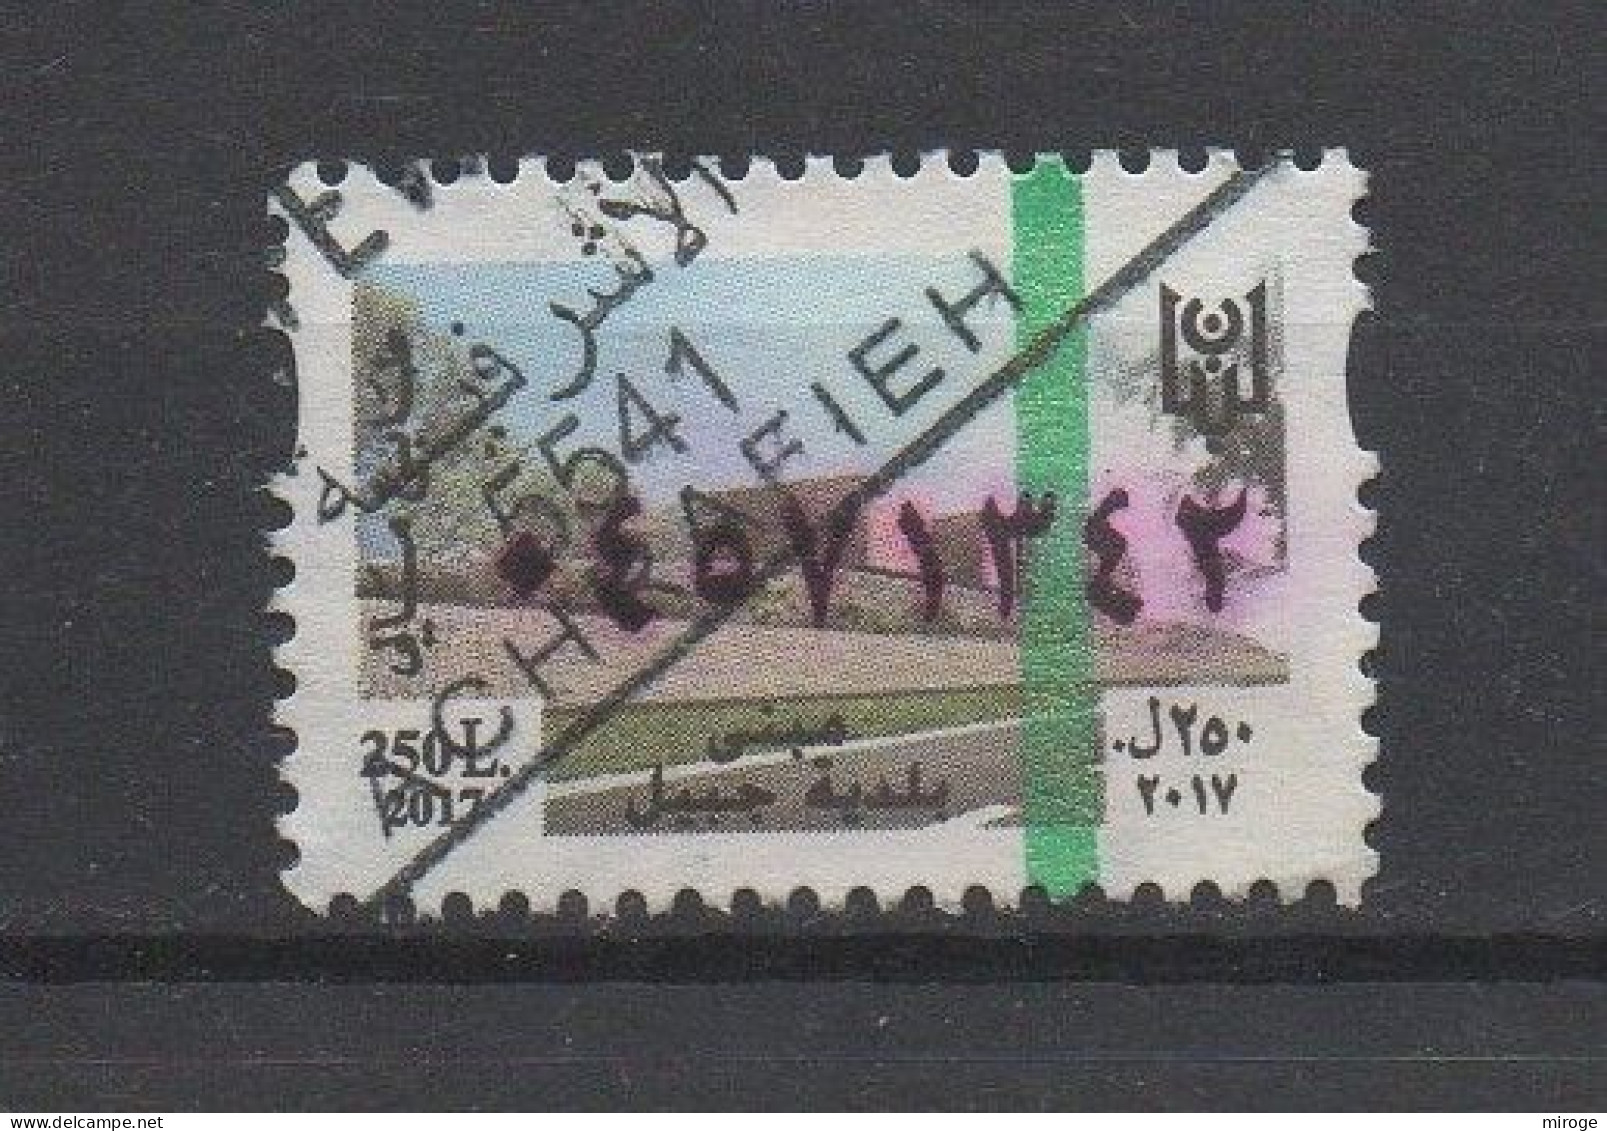 Lebanon Jbeil Fiscal 2017 250L Used Revenue Stamp, Timbre Liban - Lebanon